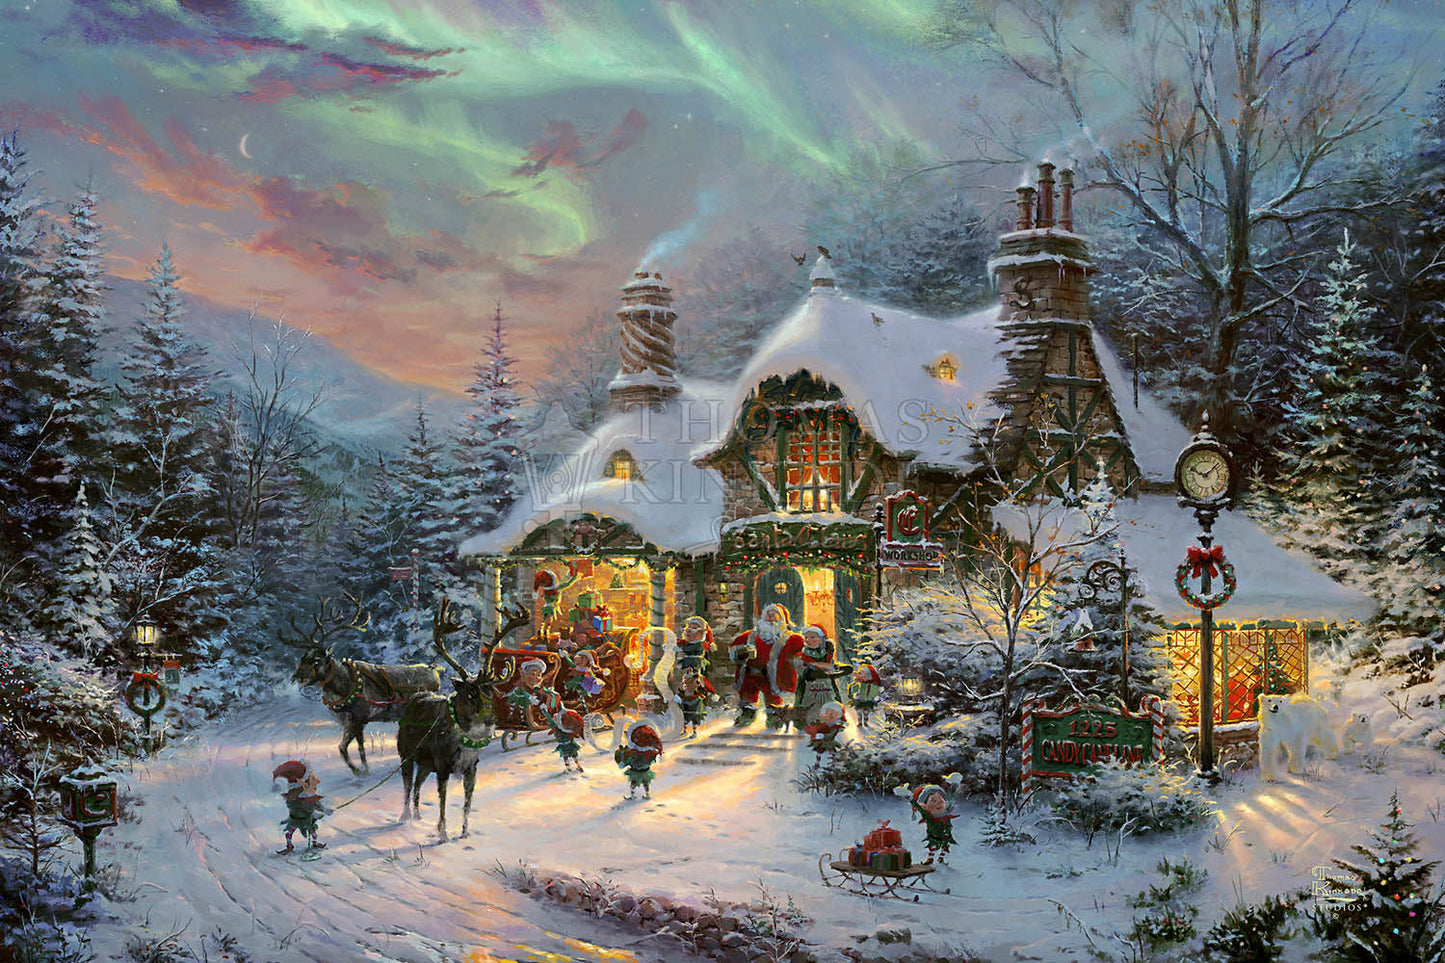 Thomas Kinkade Studios "Santa's Night Before Christmas" Limited and Open Canvas Giclee